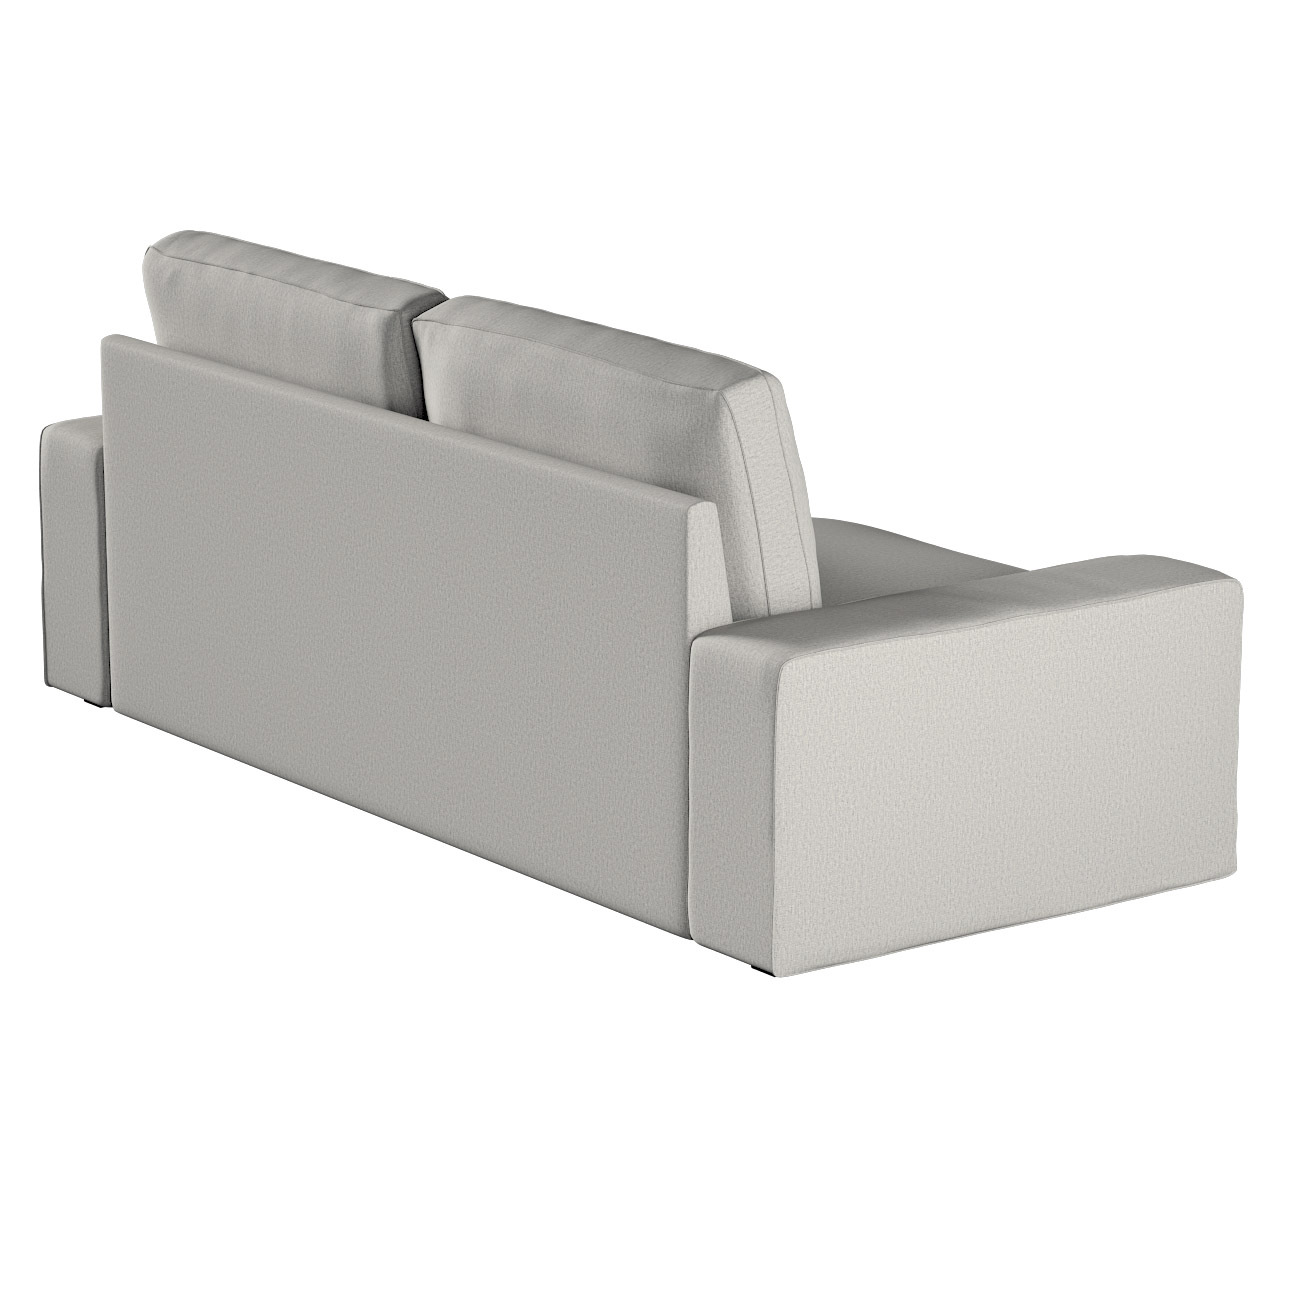 Bezug für Kivik 3-Sitzer Sofa, grau-beige, Bezug für Sofa Kivik 3-Sitzer, M günstig online kaufen